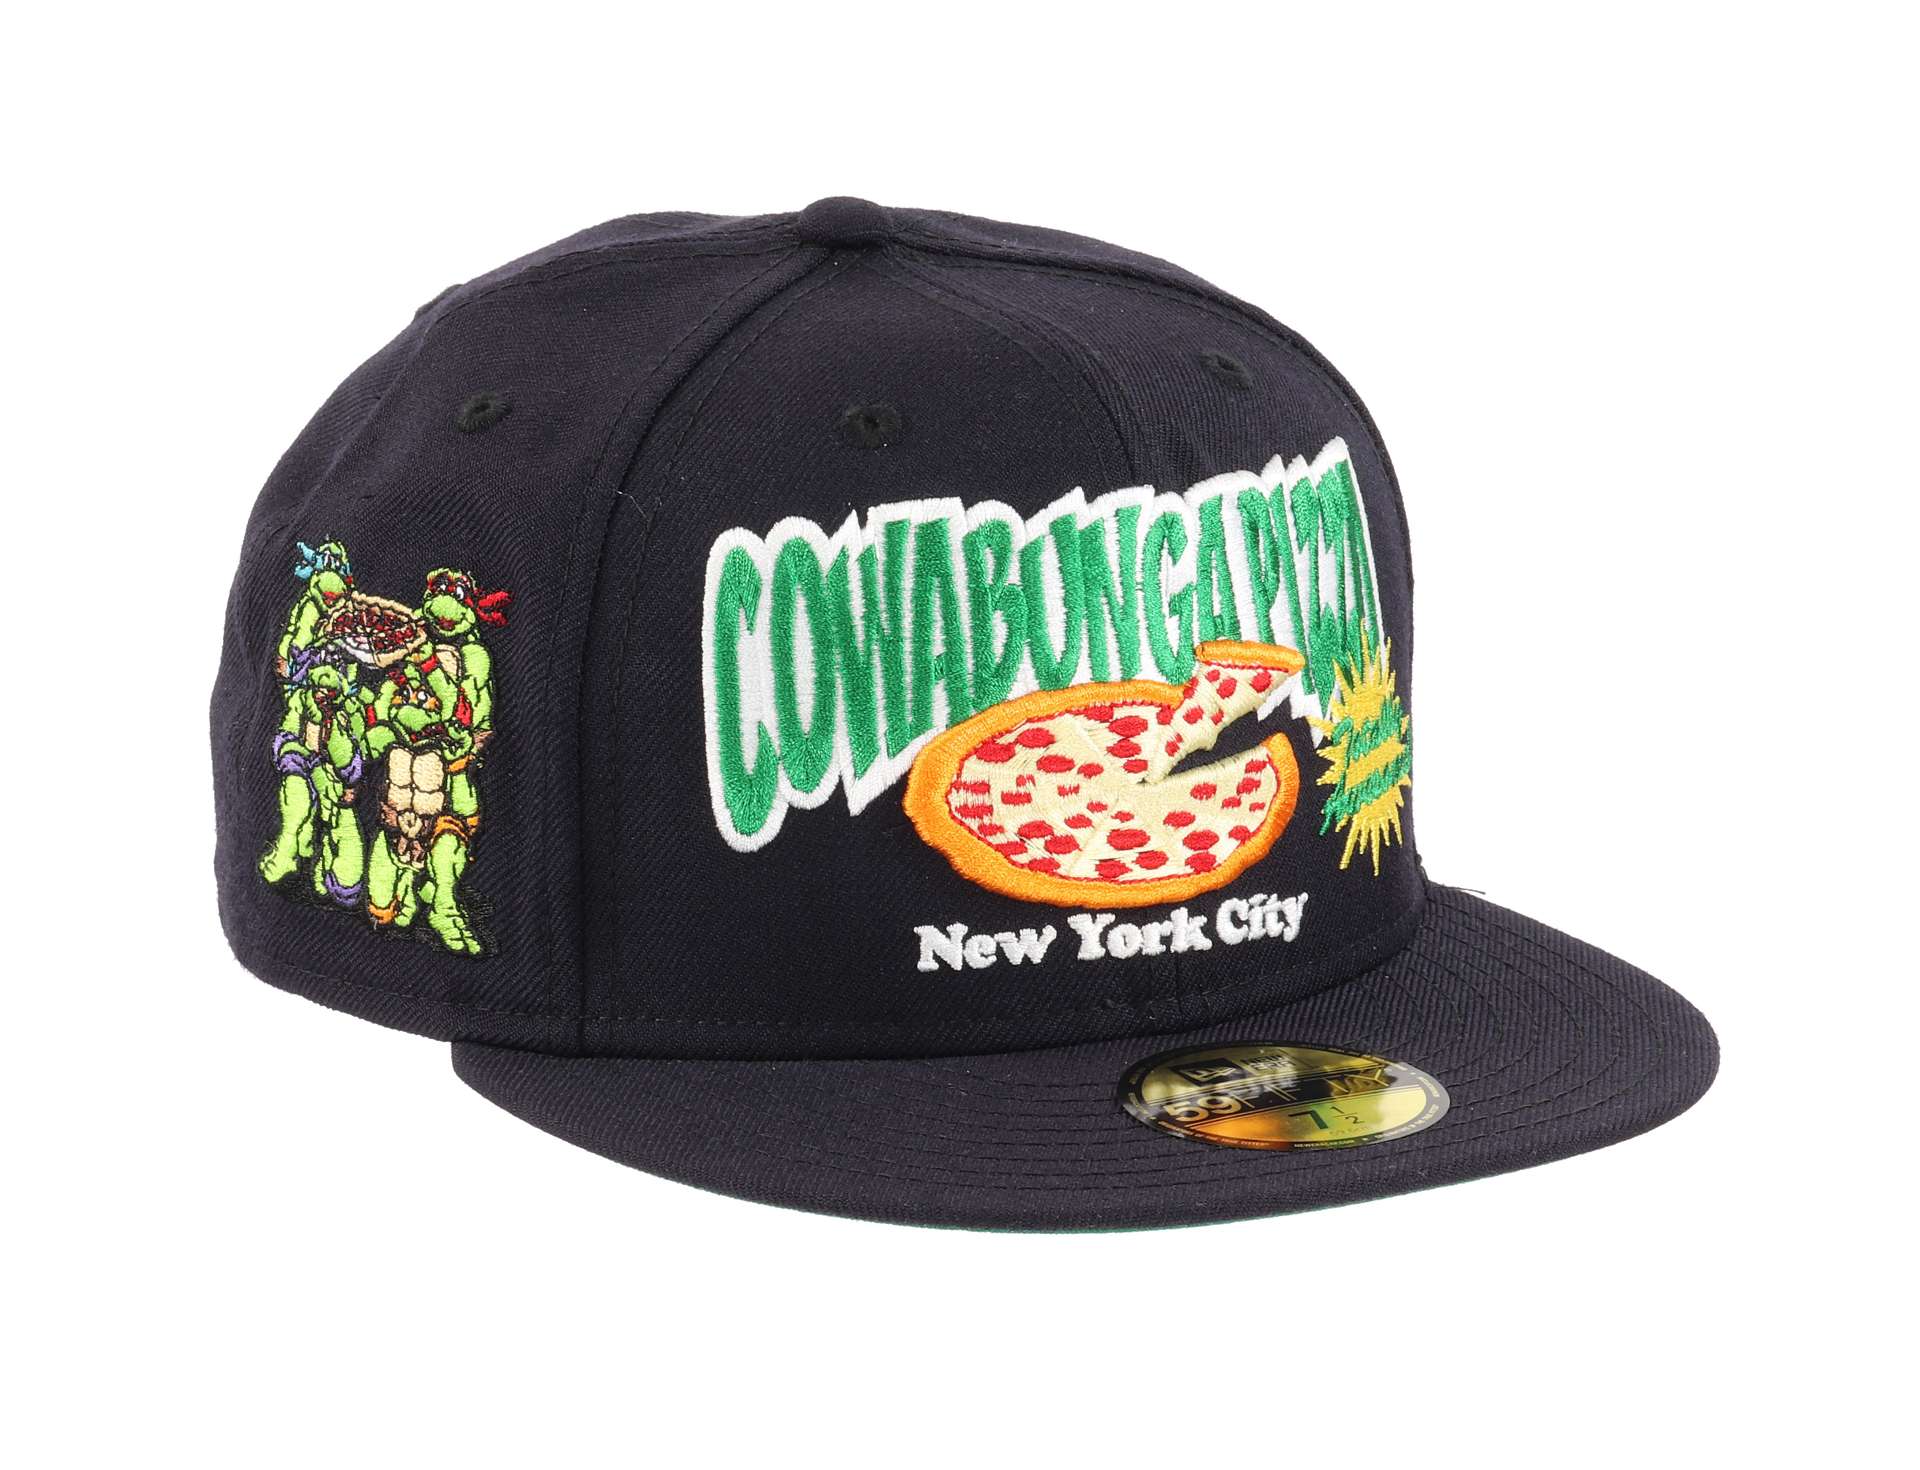 Cowabunga Pizza Ninja Turtles Navy TMNT Edition 59Fifty Cap New Era